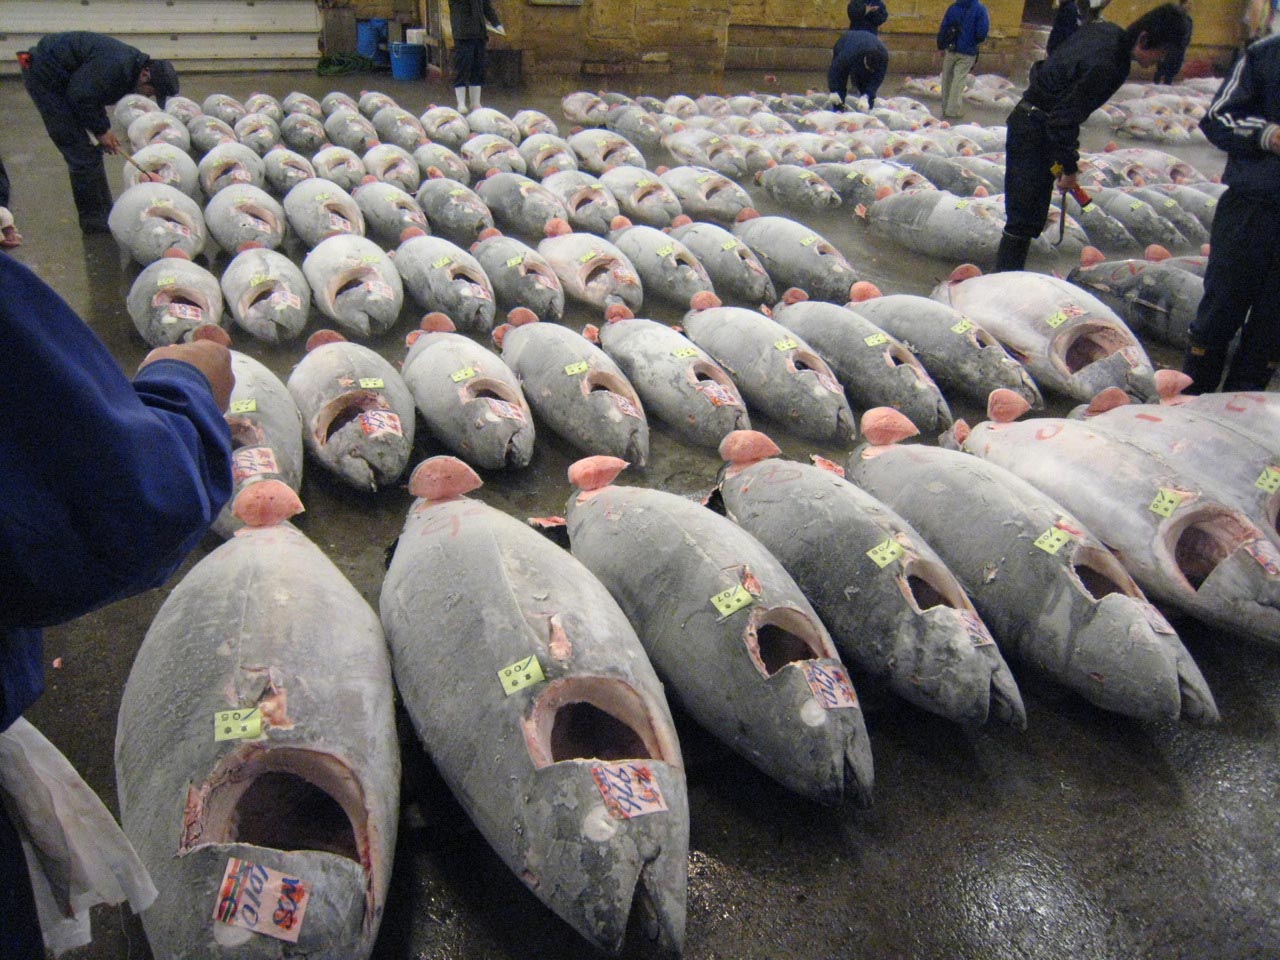 tsukiji market1 Biggest Wholesale Fish and Seafood Market